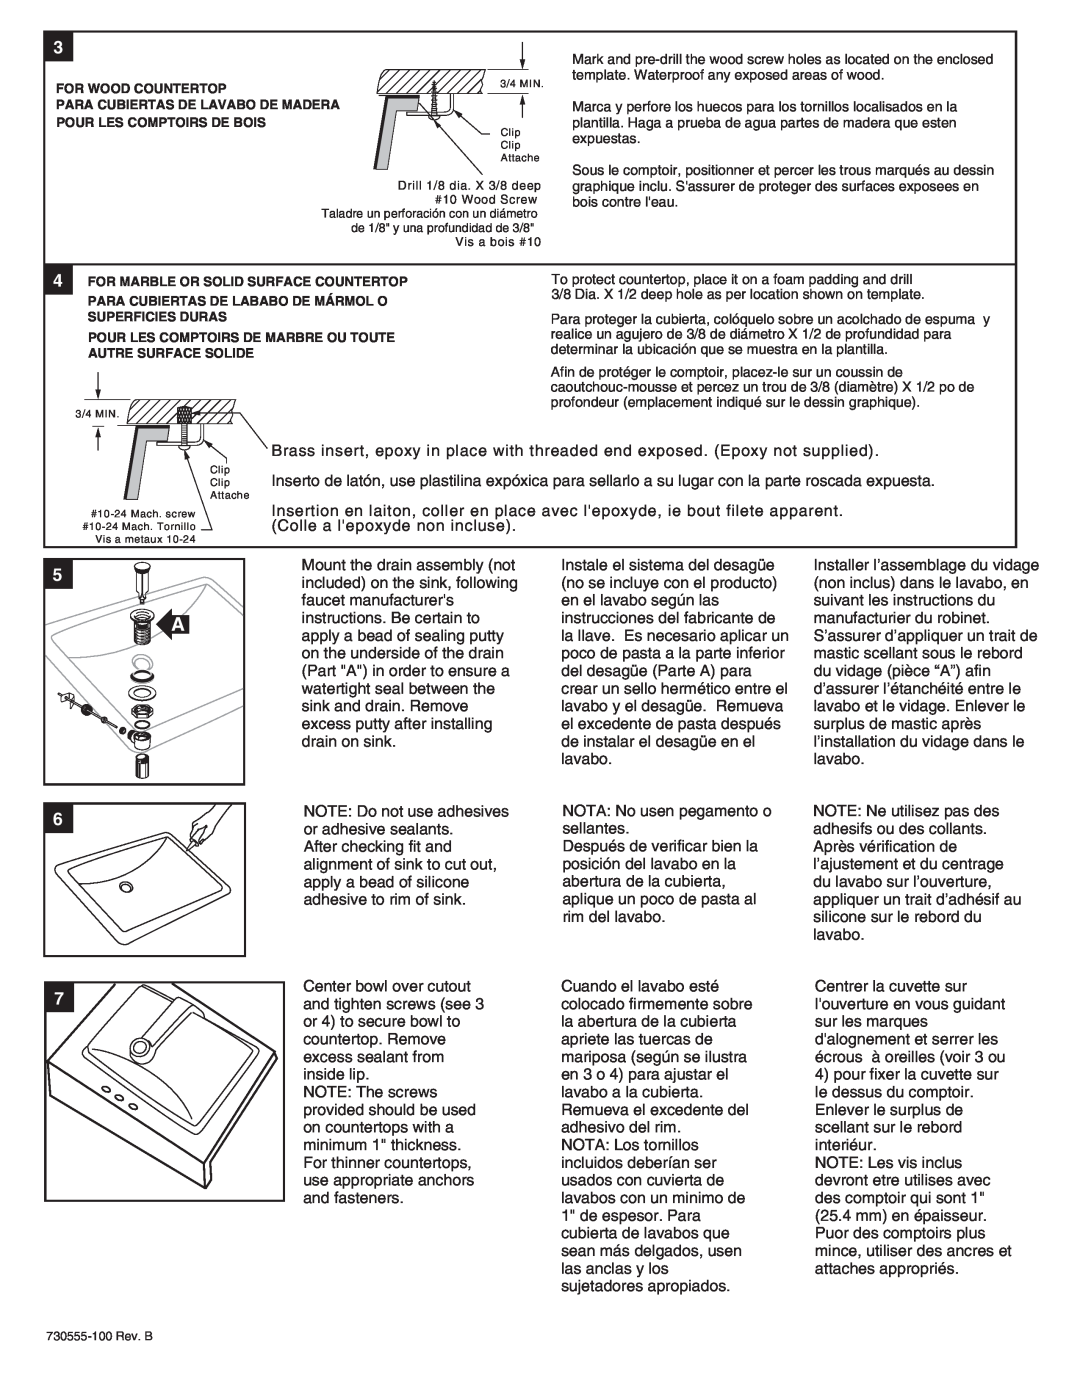 American Standard 0634 installation instructions 